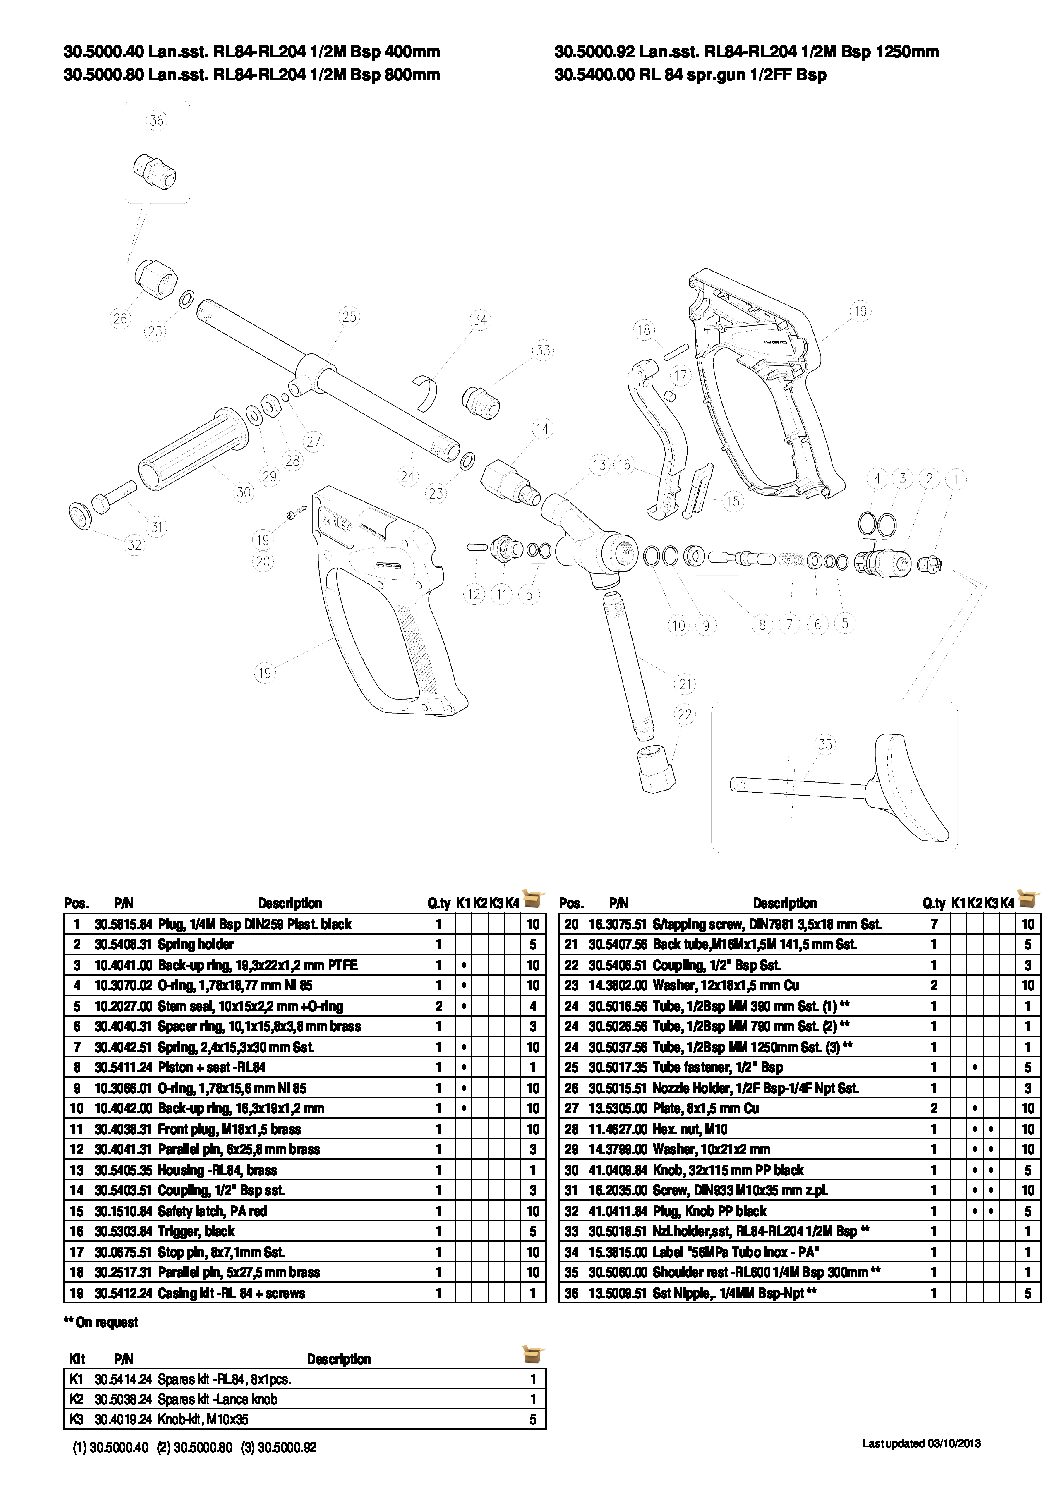 PA RL84 / RL19 / RL204 Stainless Steel Extension parts breakdown